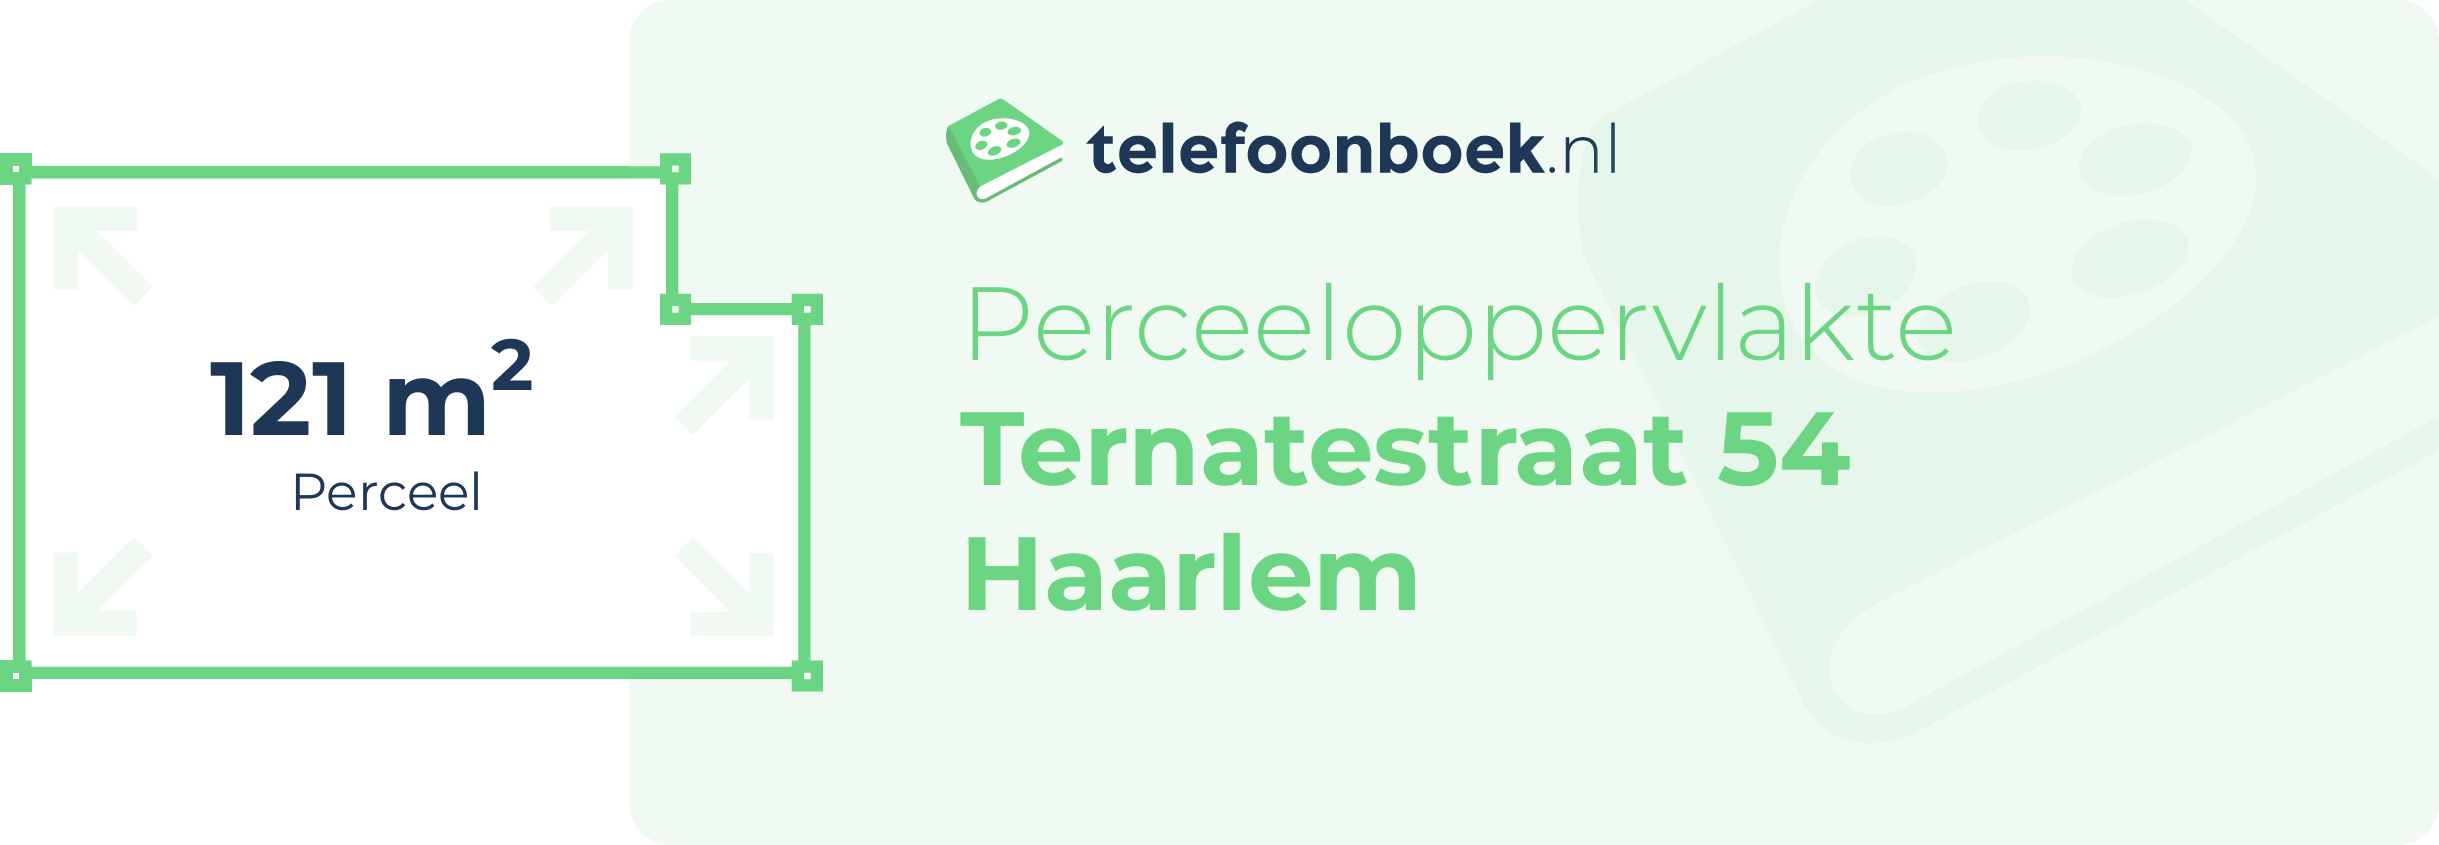 Perceeloppervlakte Ternatestraat 54 Haarlem